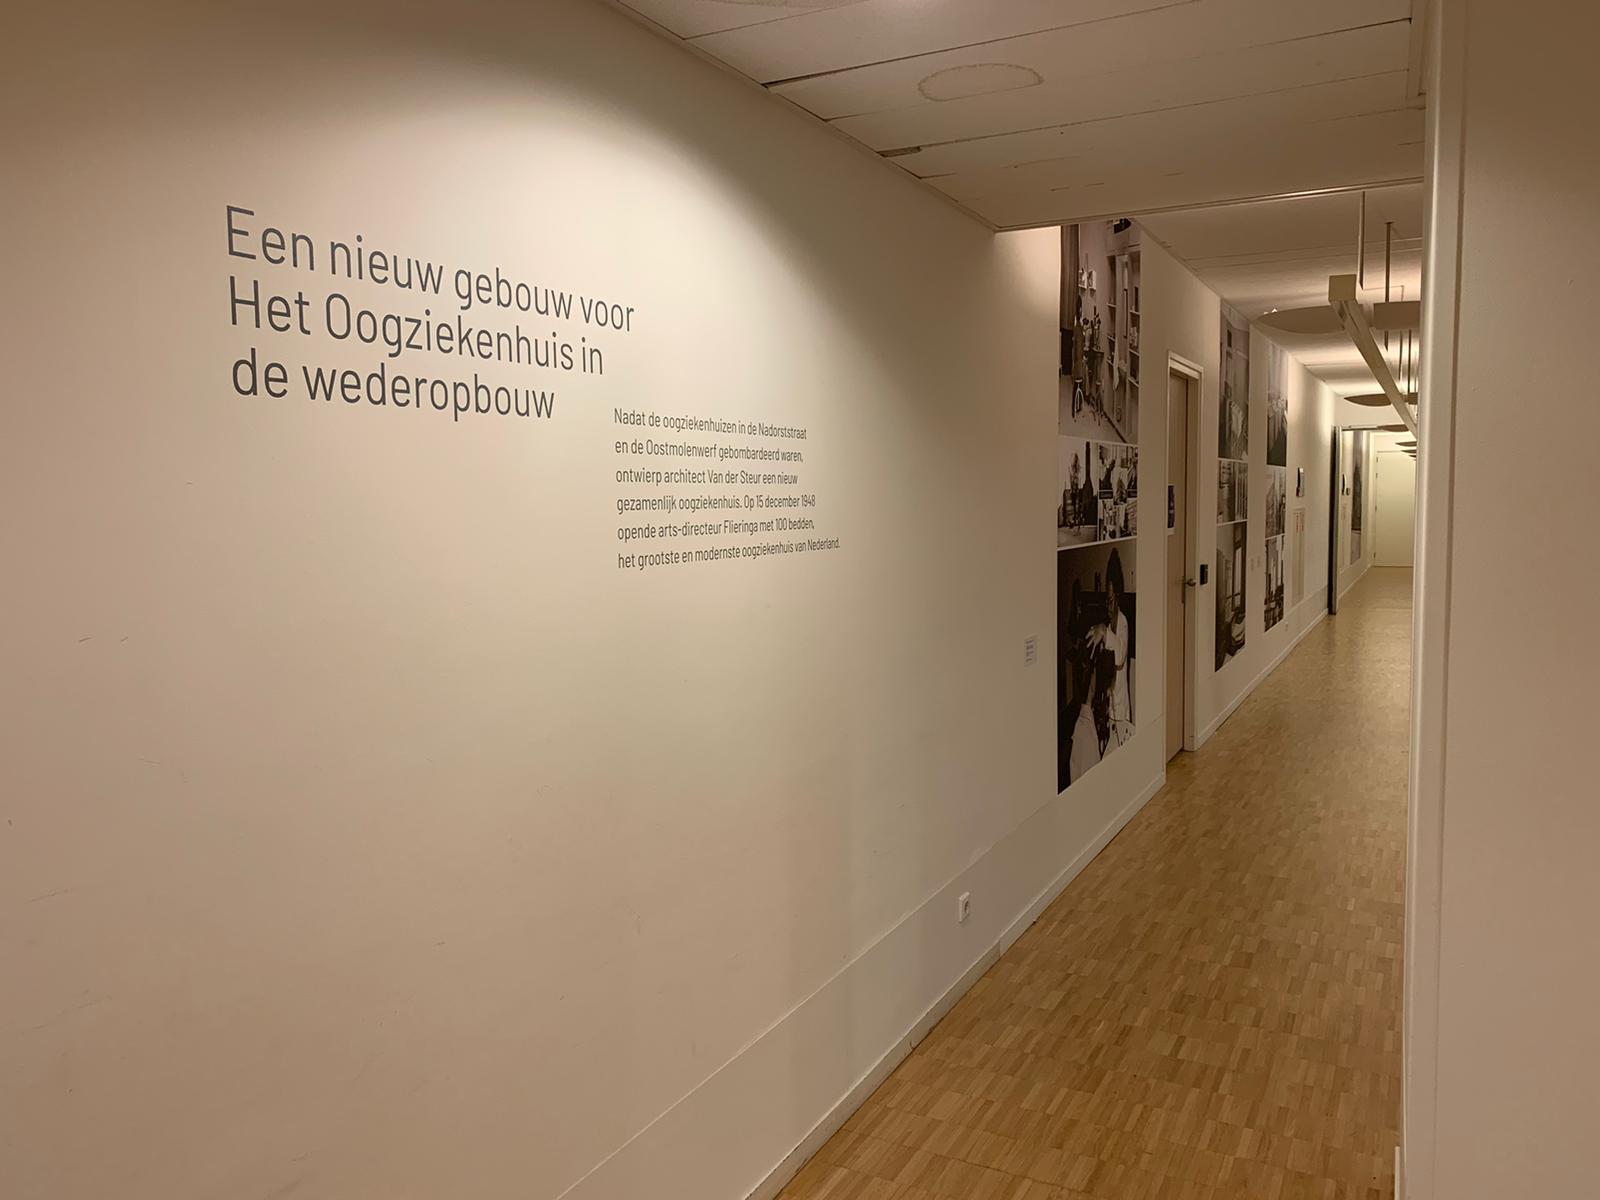 Fotowand begane grond Het Oogziekenhuis Rotterdam